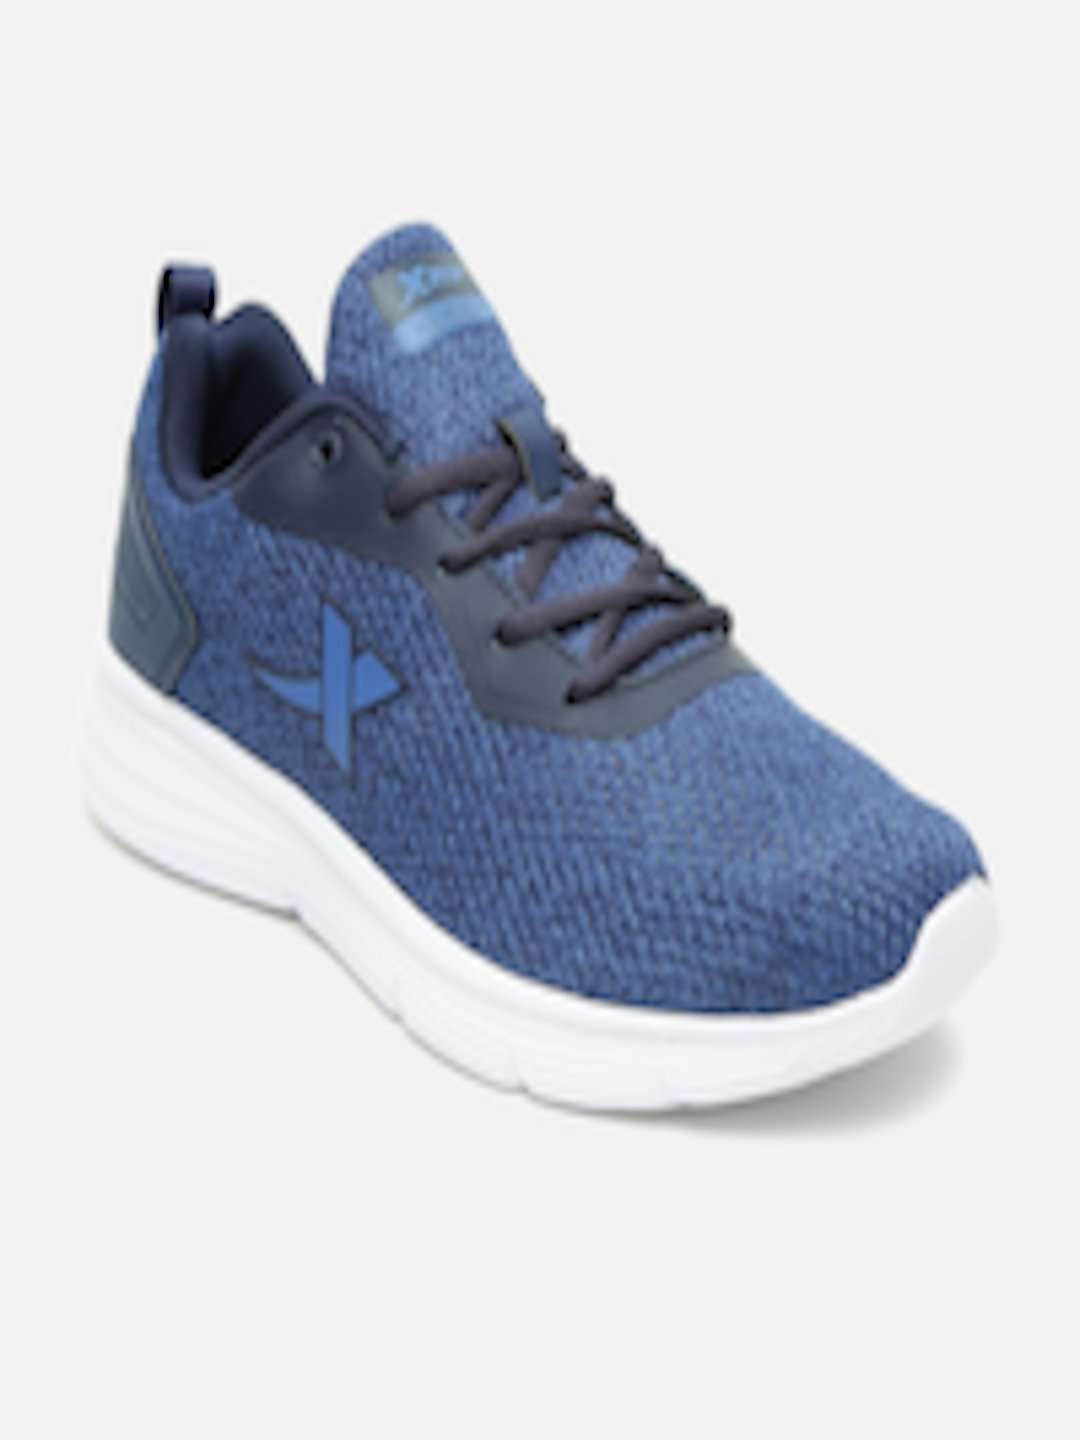 Buy Xtep Men Blue Textile Training Or Gym Shoes